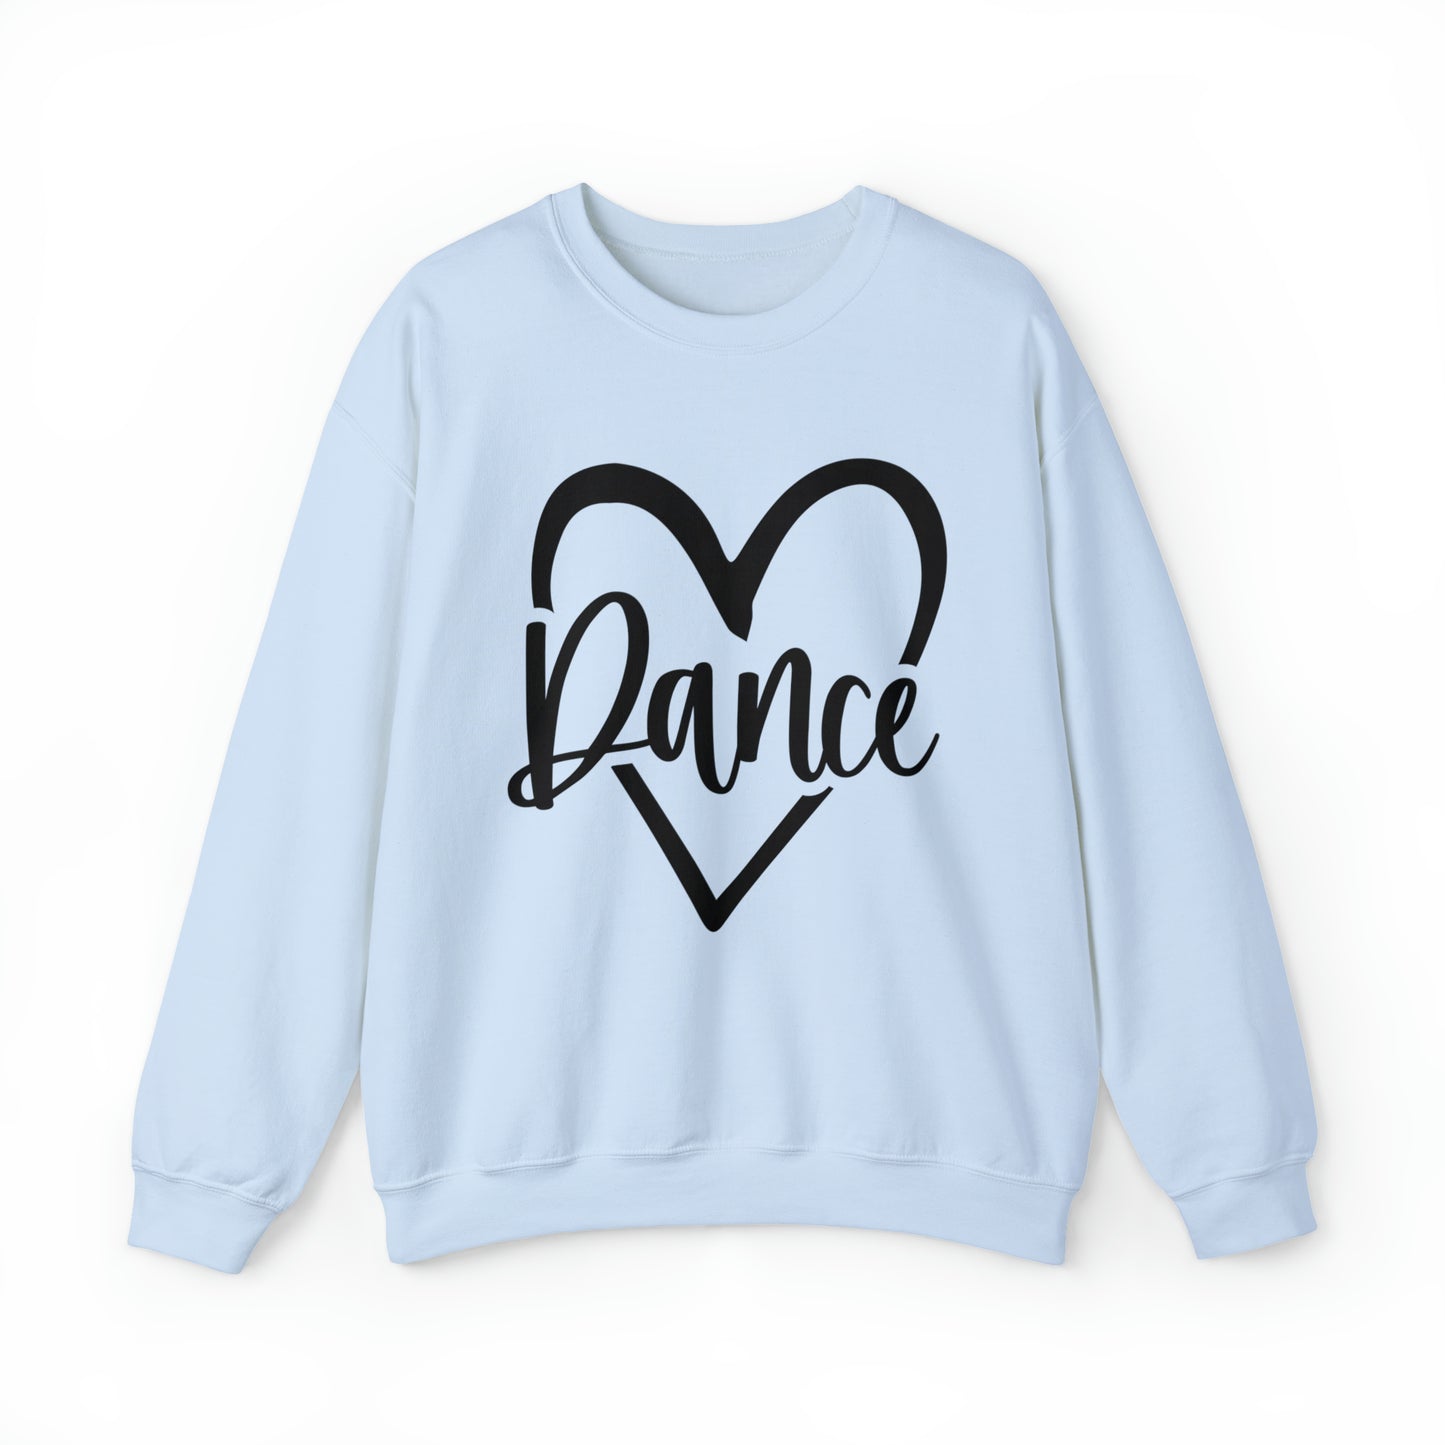 Dance Crewneck Sweatshirt